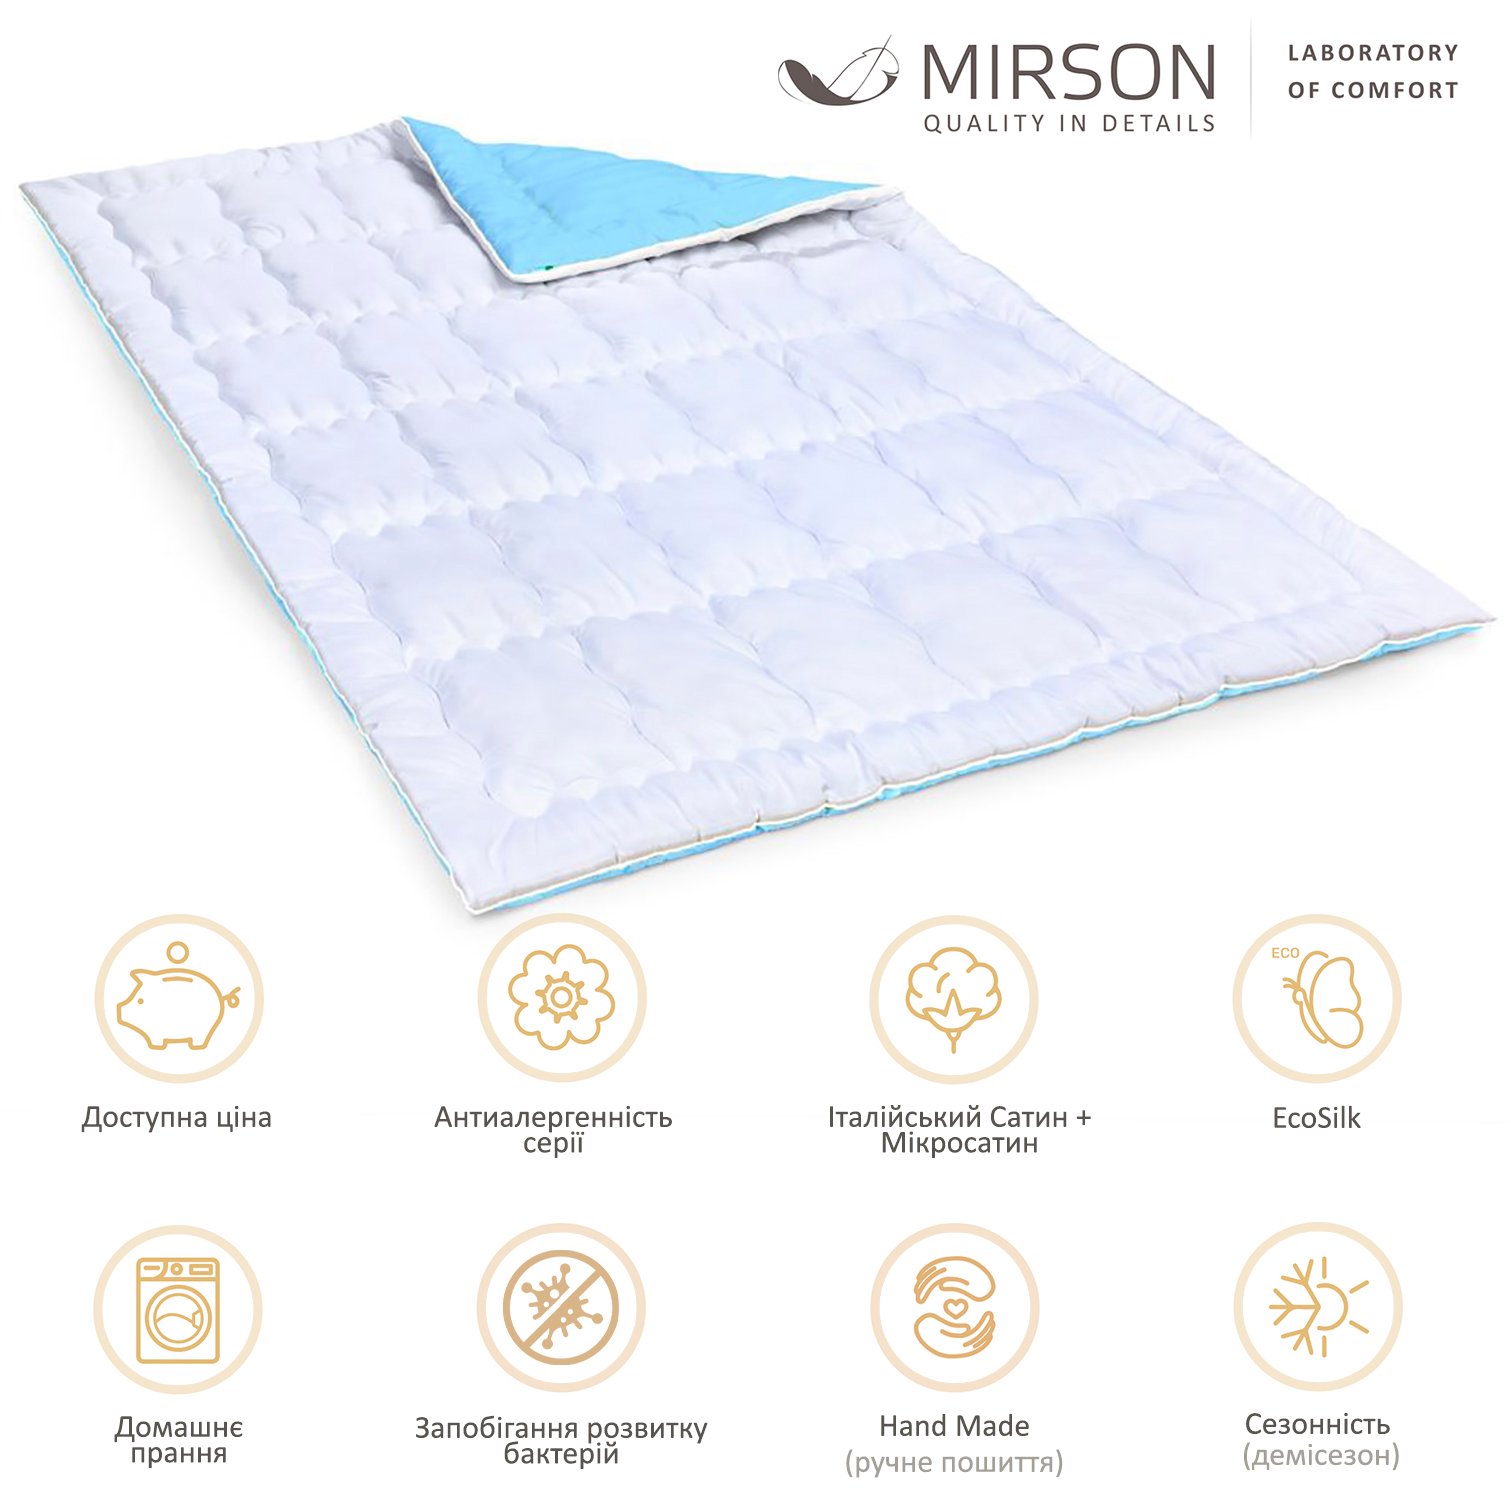 Одеяло антиаллергенное MirSon Valentino Hand Made EcoSilk №0551, демисезонное, 220x240 см, бело-голубое (58568122) - фото 5